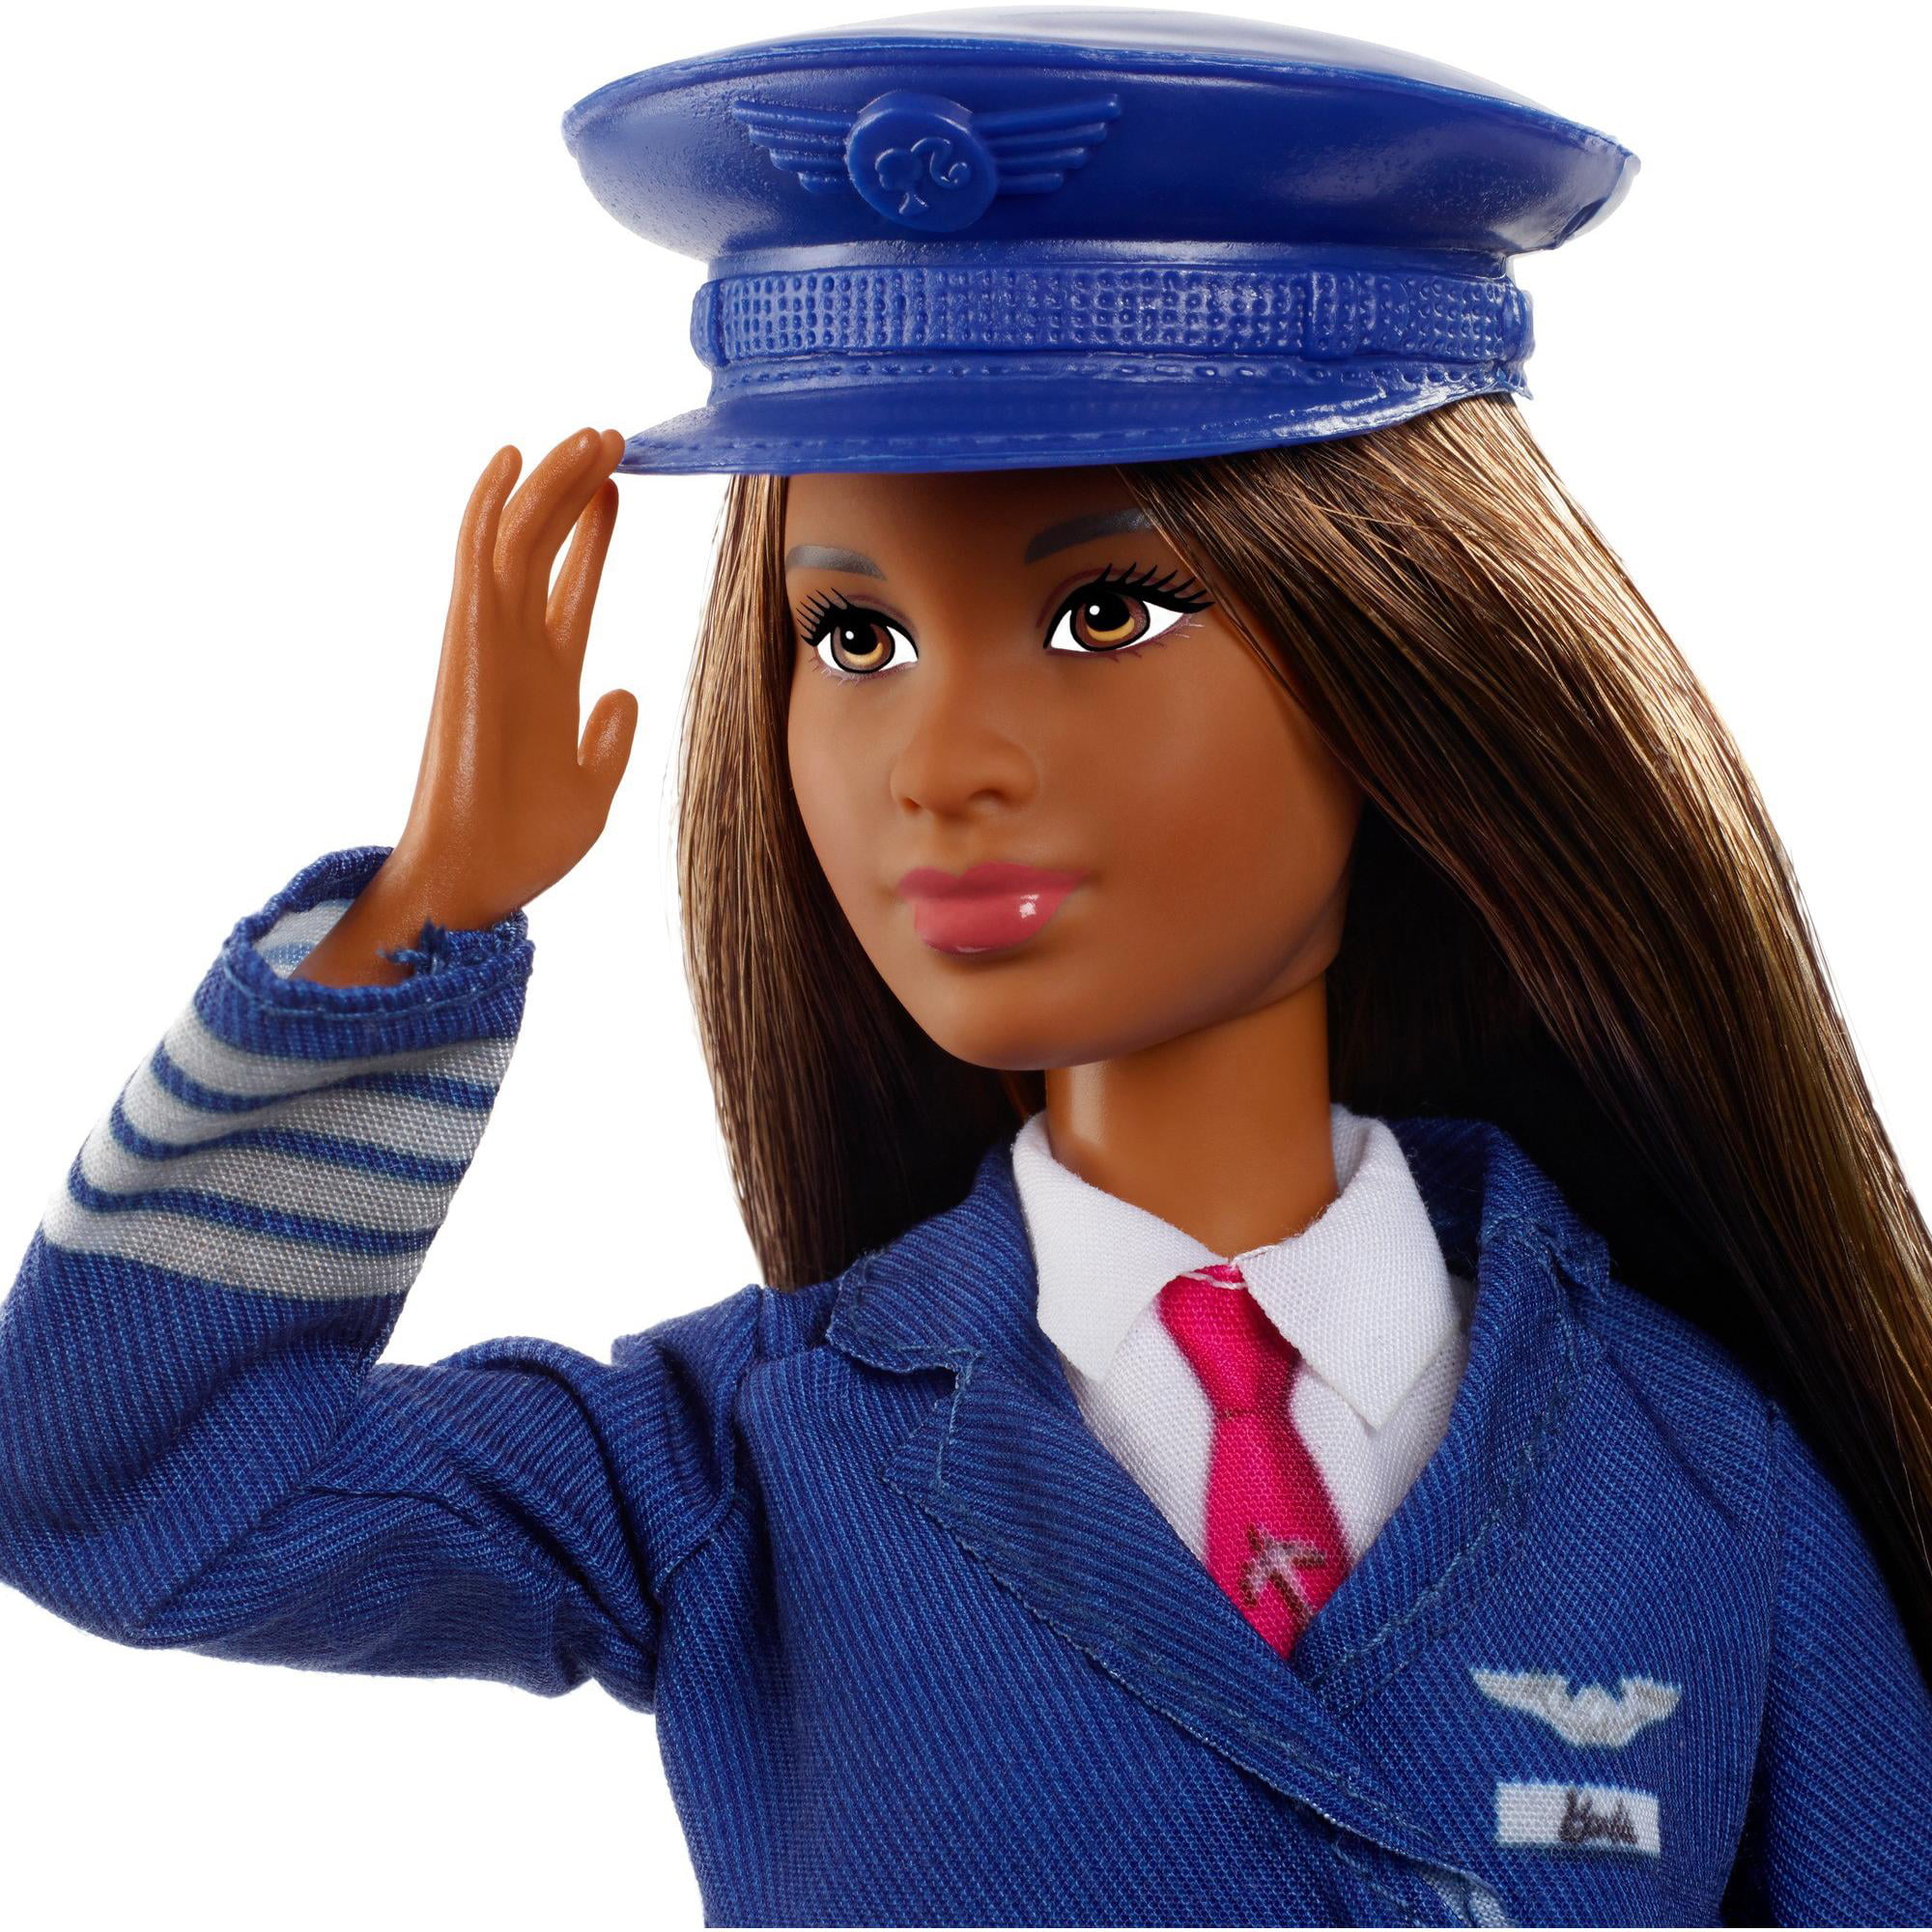 New Barbie Careers Barbie 60th Anniversary Careers Pilot Doll